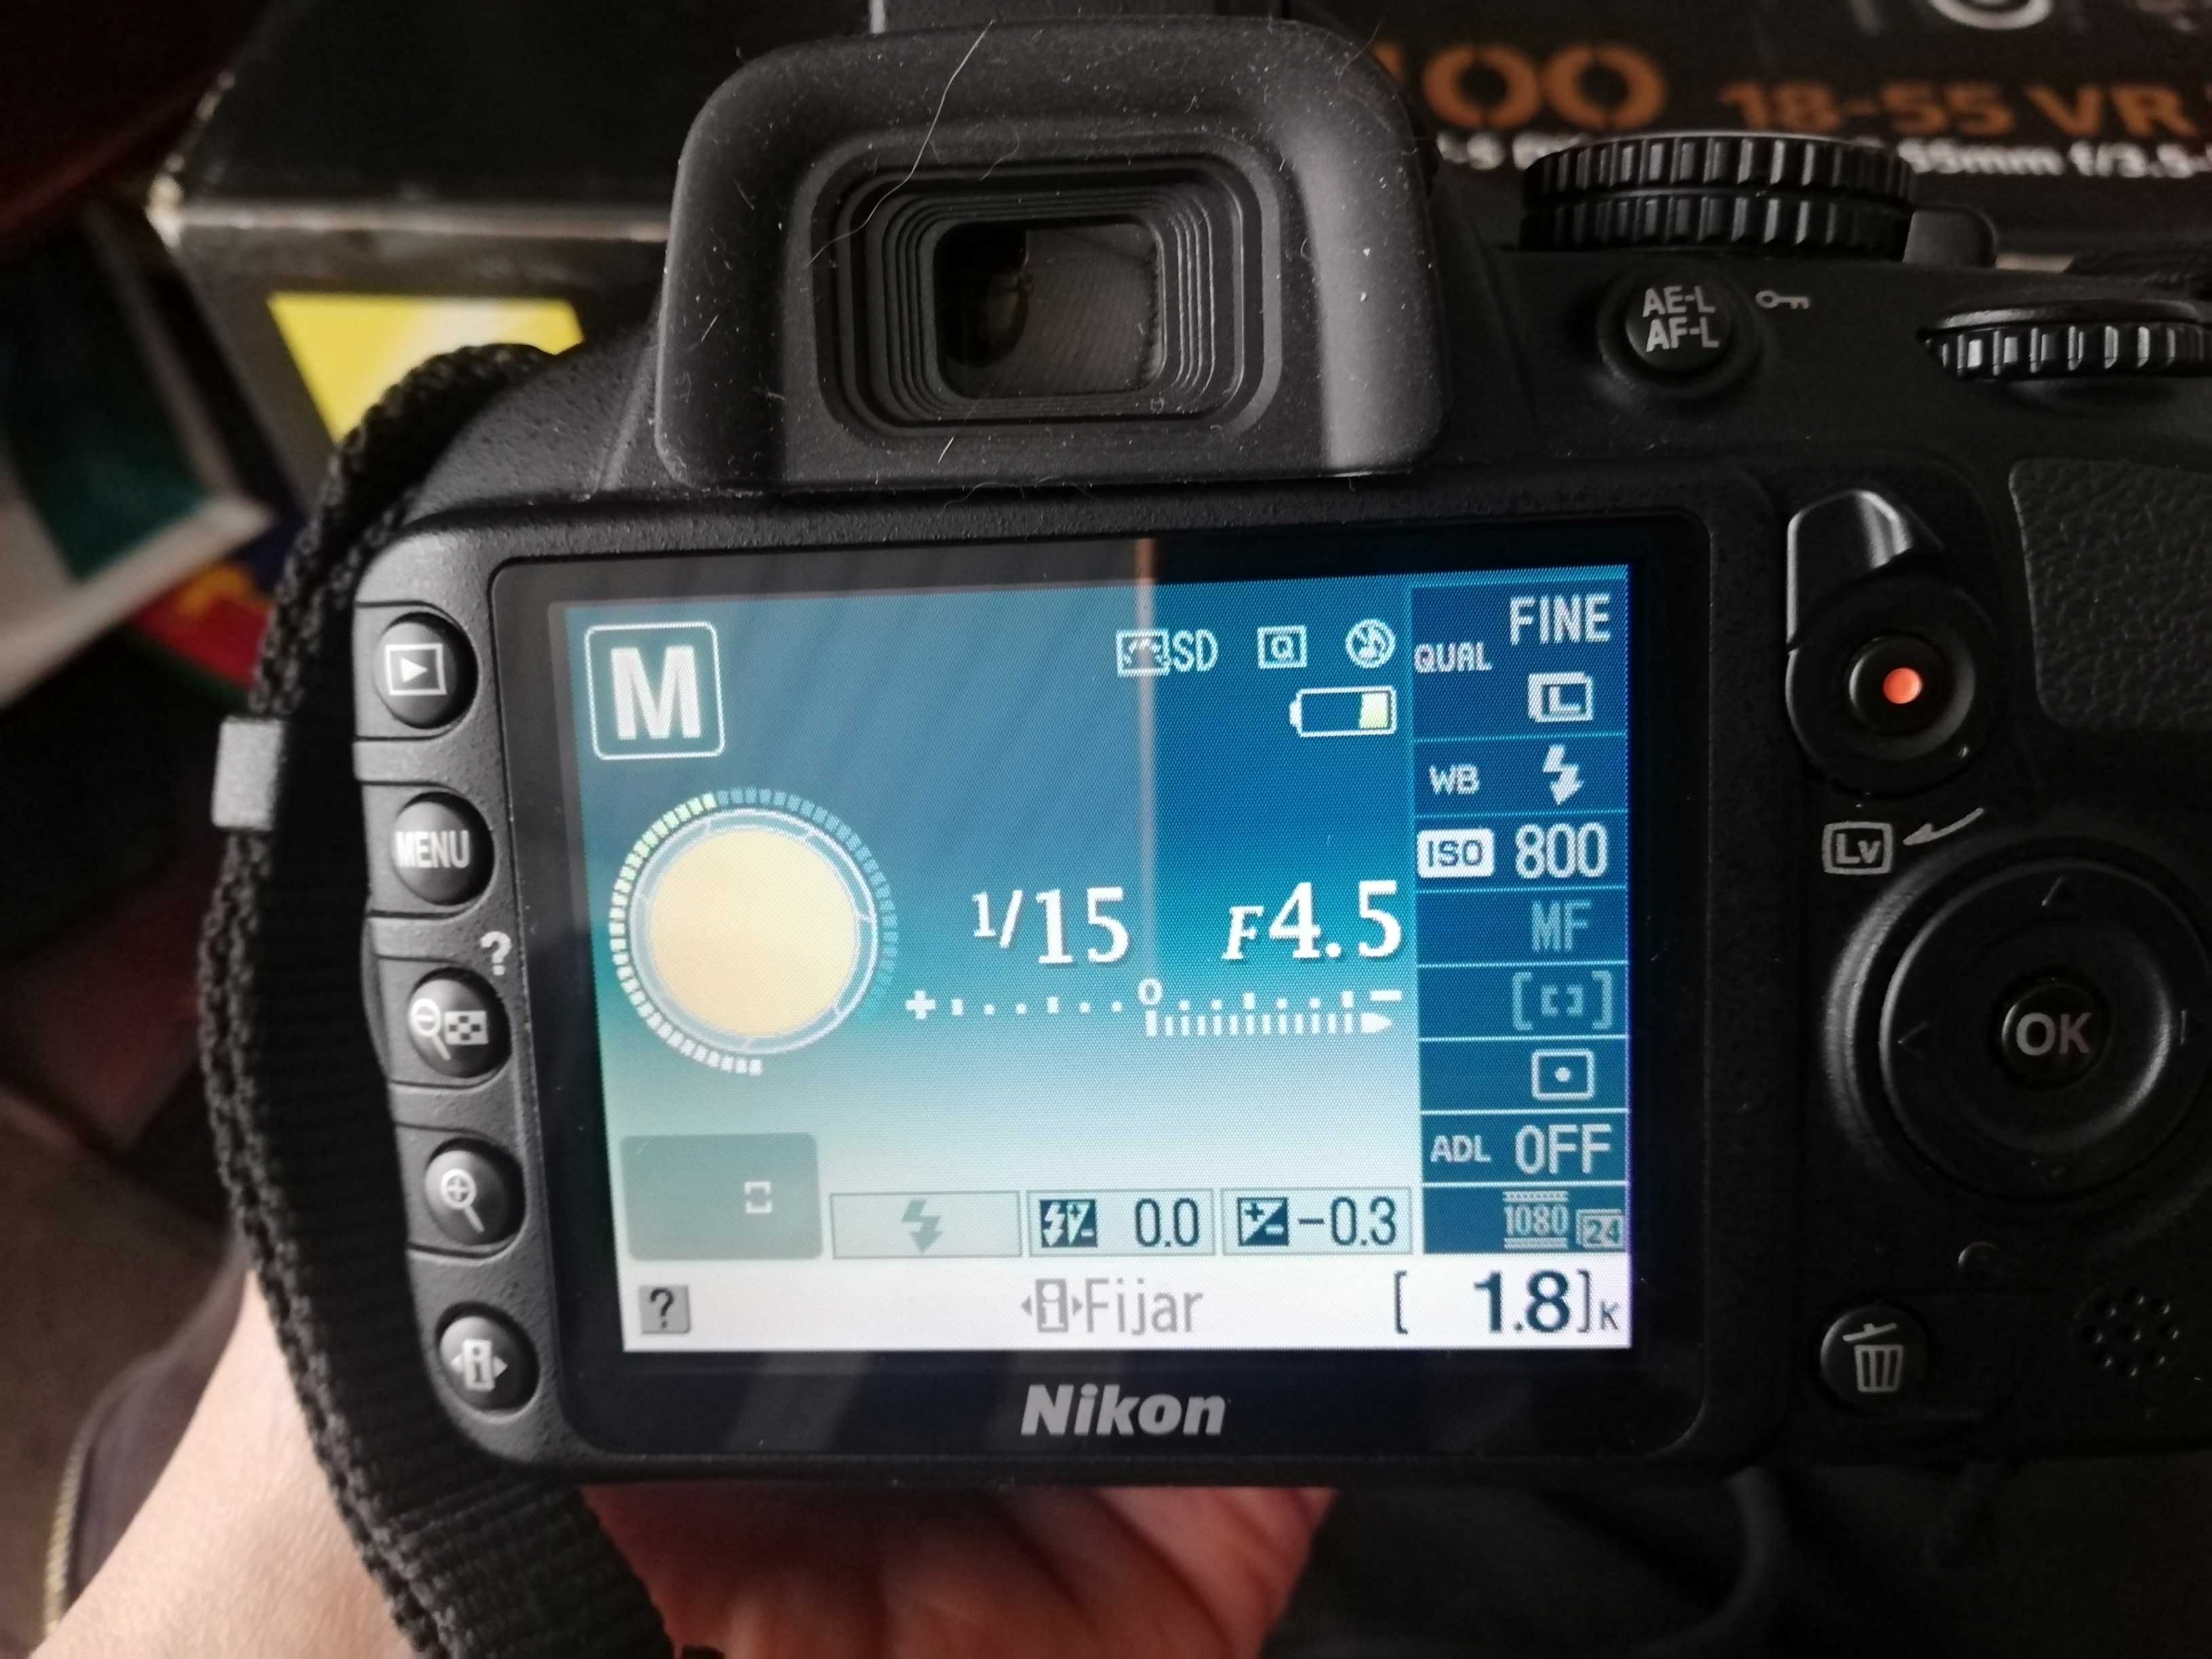 Câmara Nikon D3100 Pouco uso. Menos de 6000 disparos. Quase nova